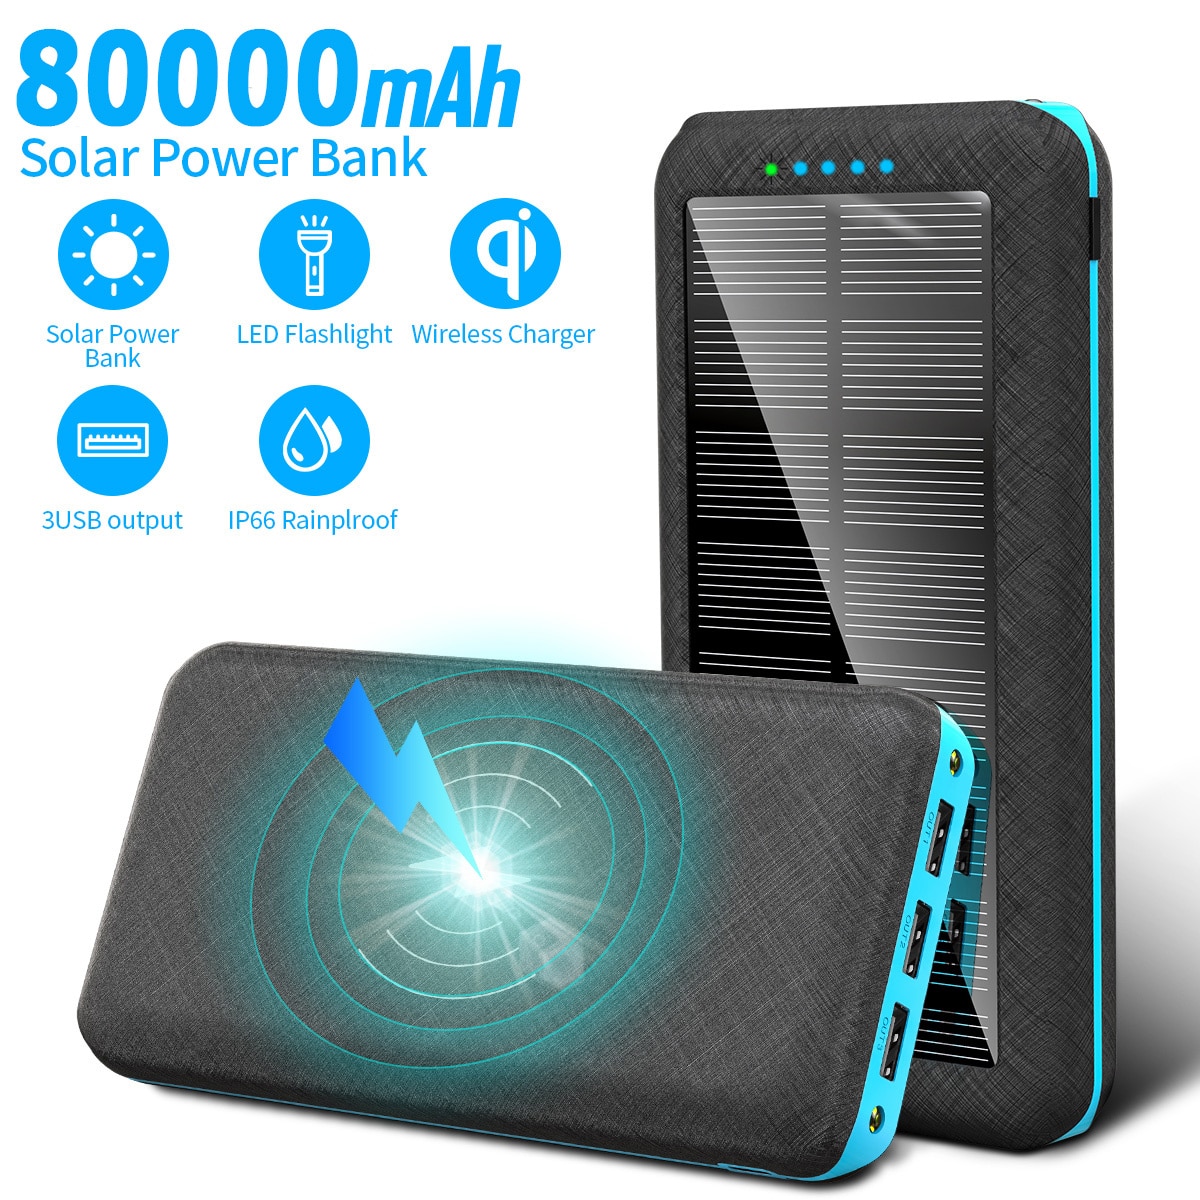 80000 MAH portable wireless fast charger, solar panel, LED light, three USB ports, suitable